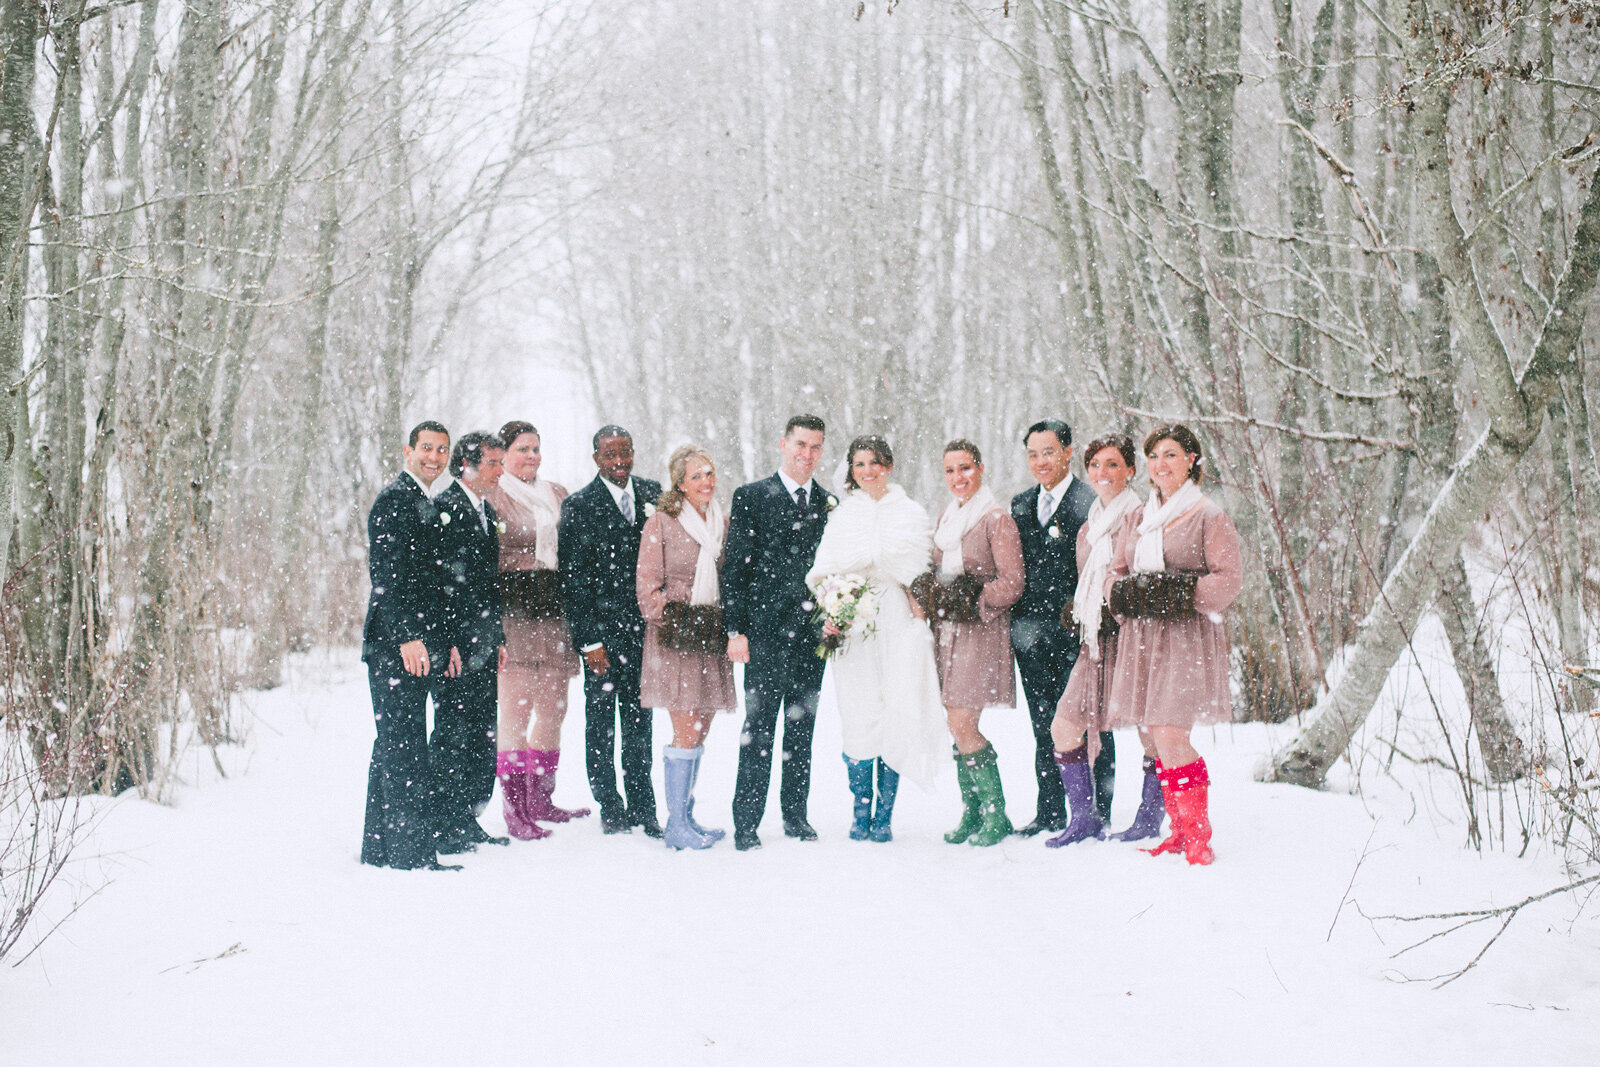 nn_winter_wedding1.JPG